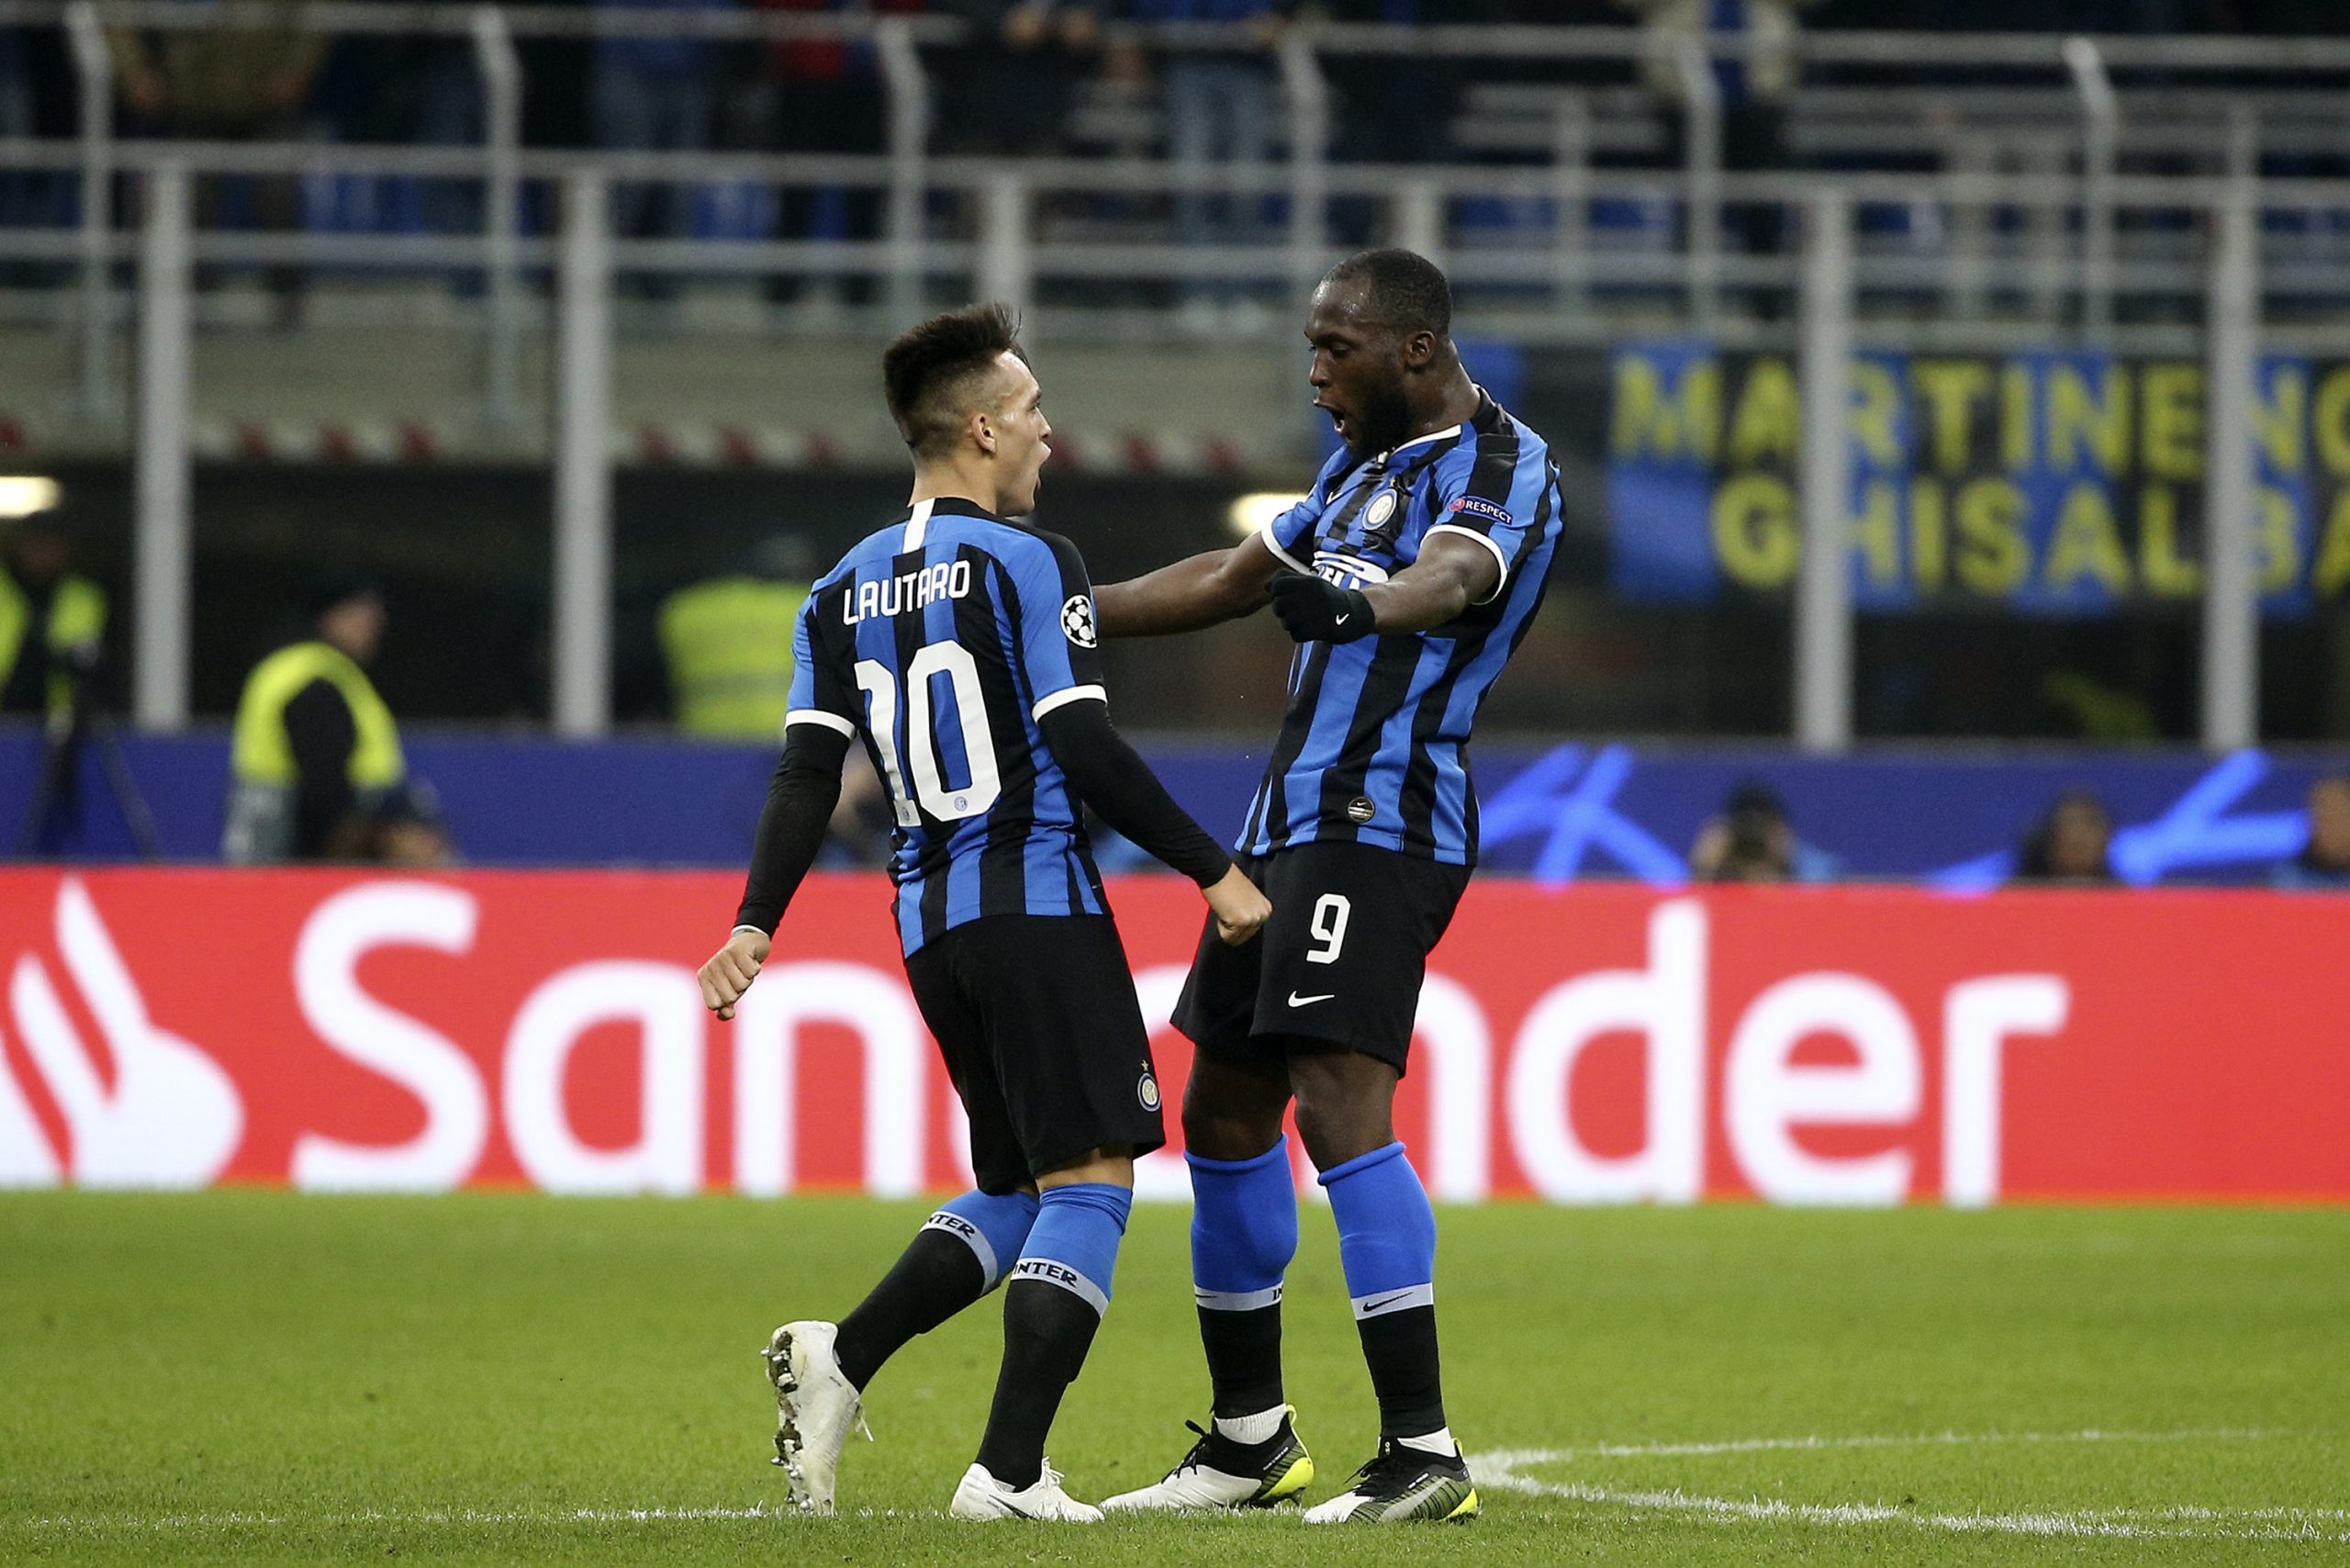 Romelu Lukaku and Lautaro Martínez give Antonio Conte's Inter Milan a superstar strike partnership